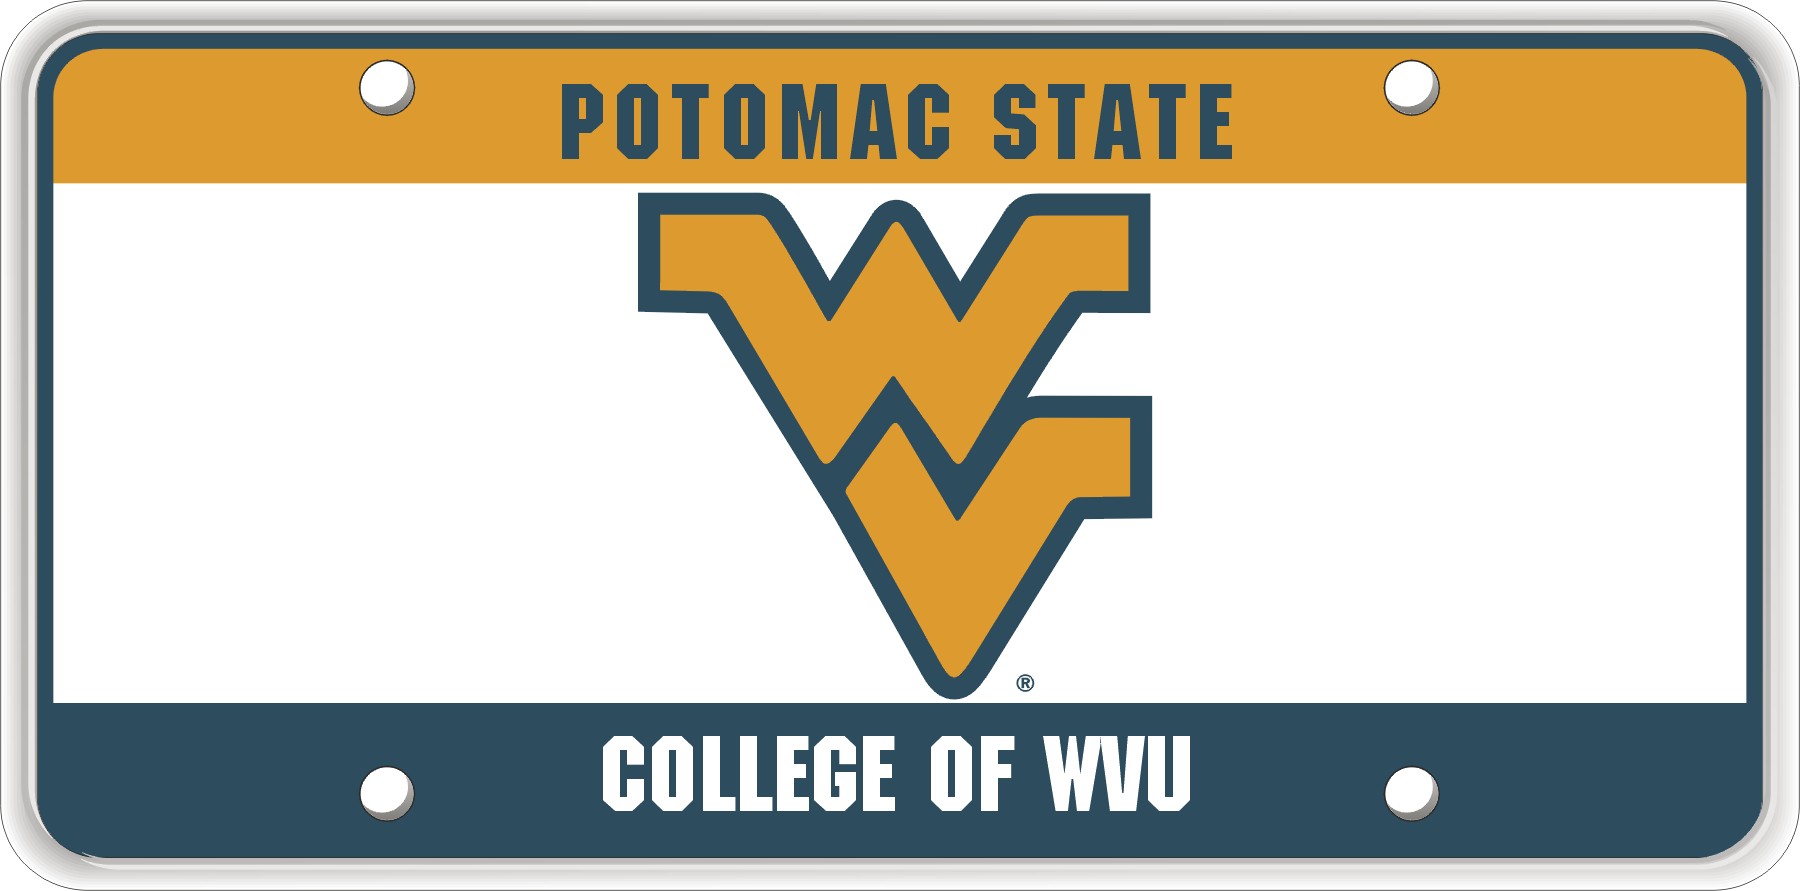 WVU School Specific - Potomac State College of WVU